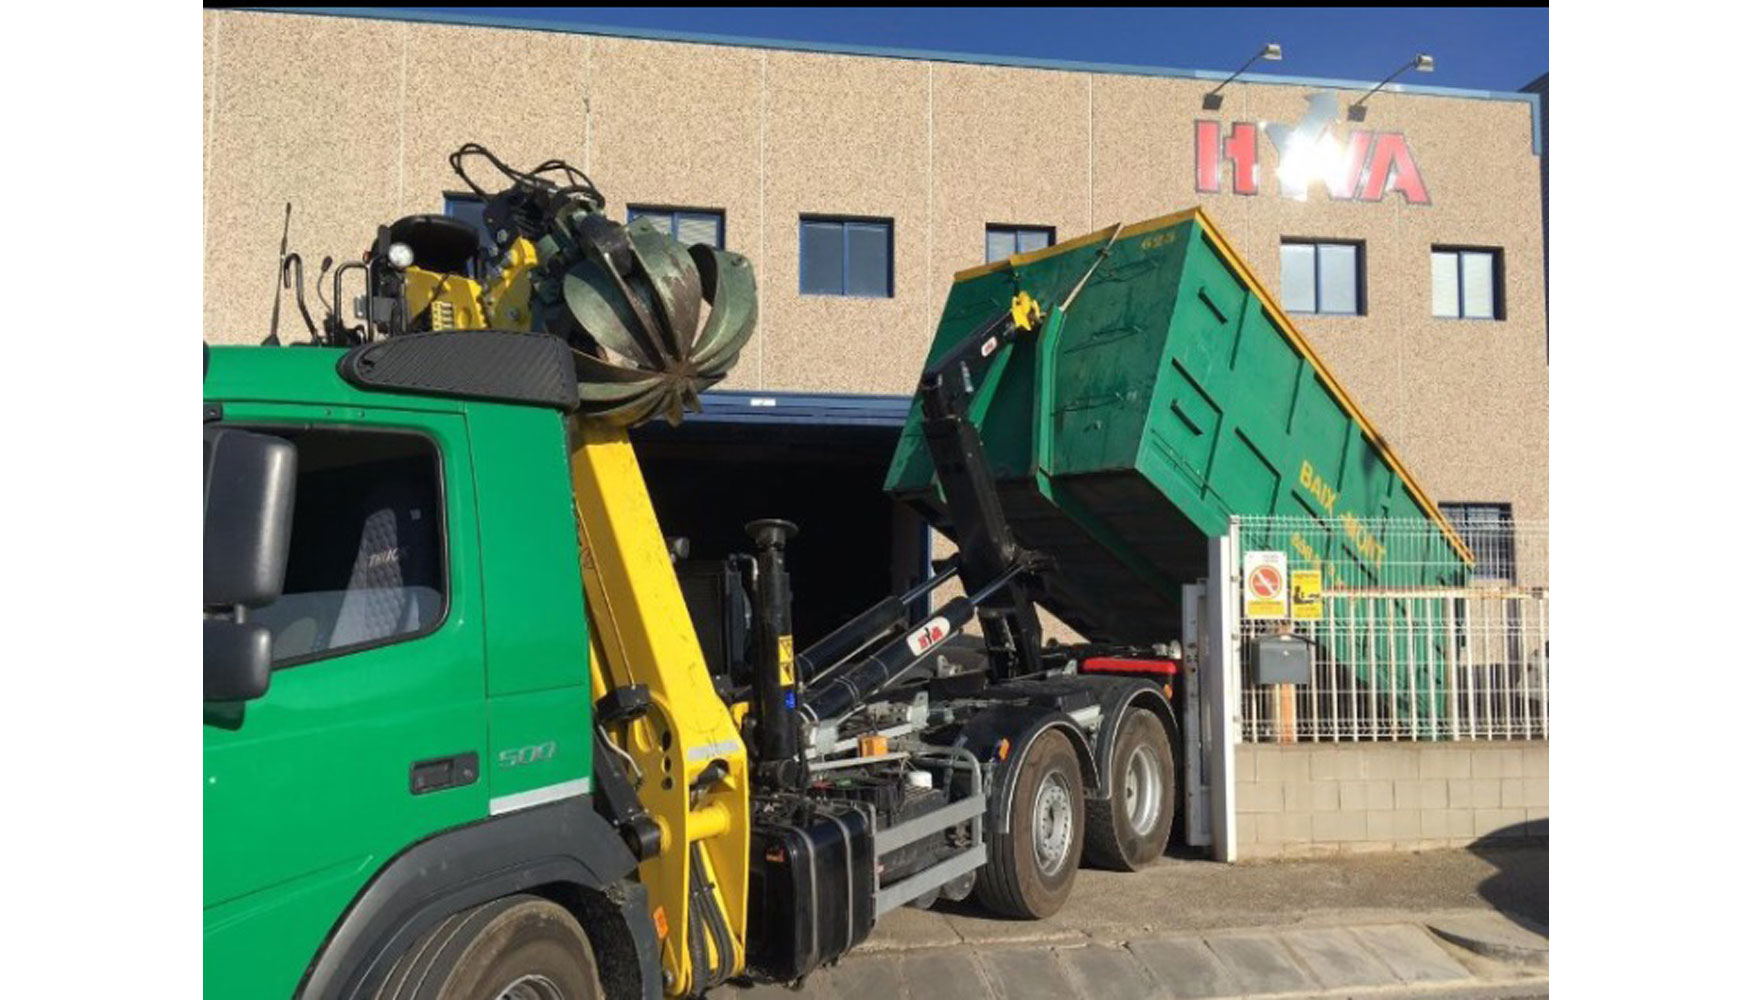 Equipo suministrado por Hyva Ibrica a Baix-Mont, empresa especializada en la gestin de residuos en Amposta